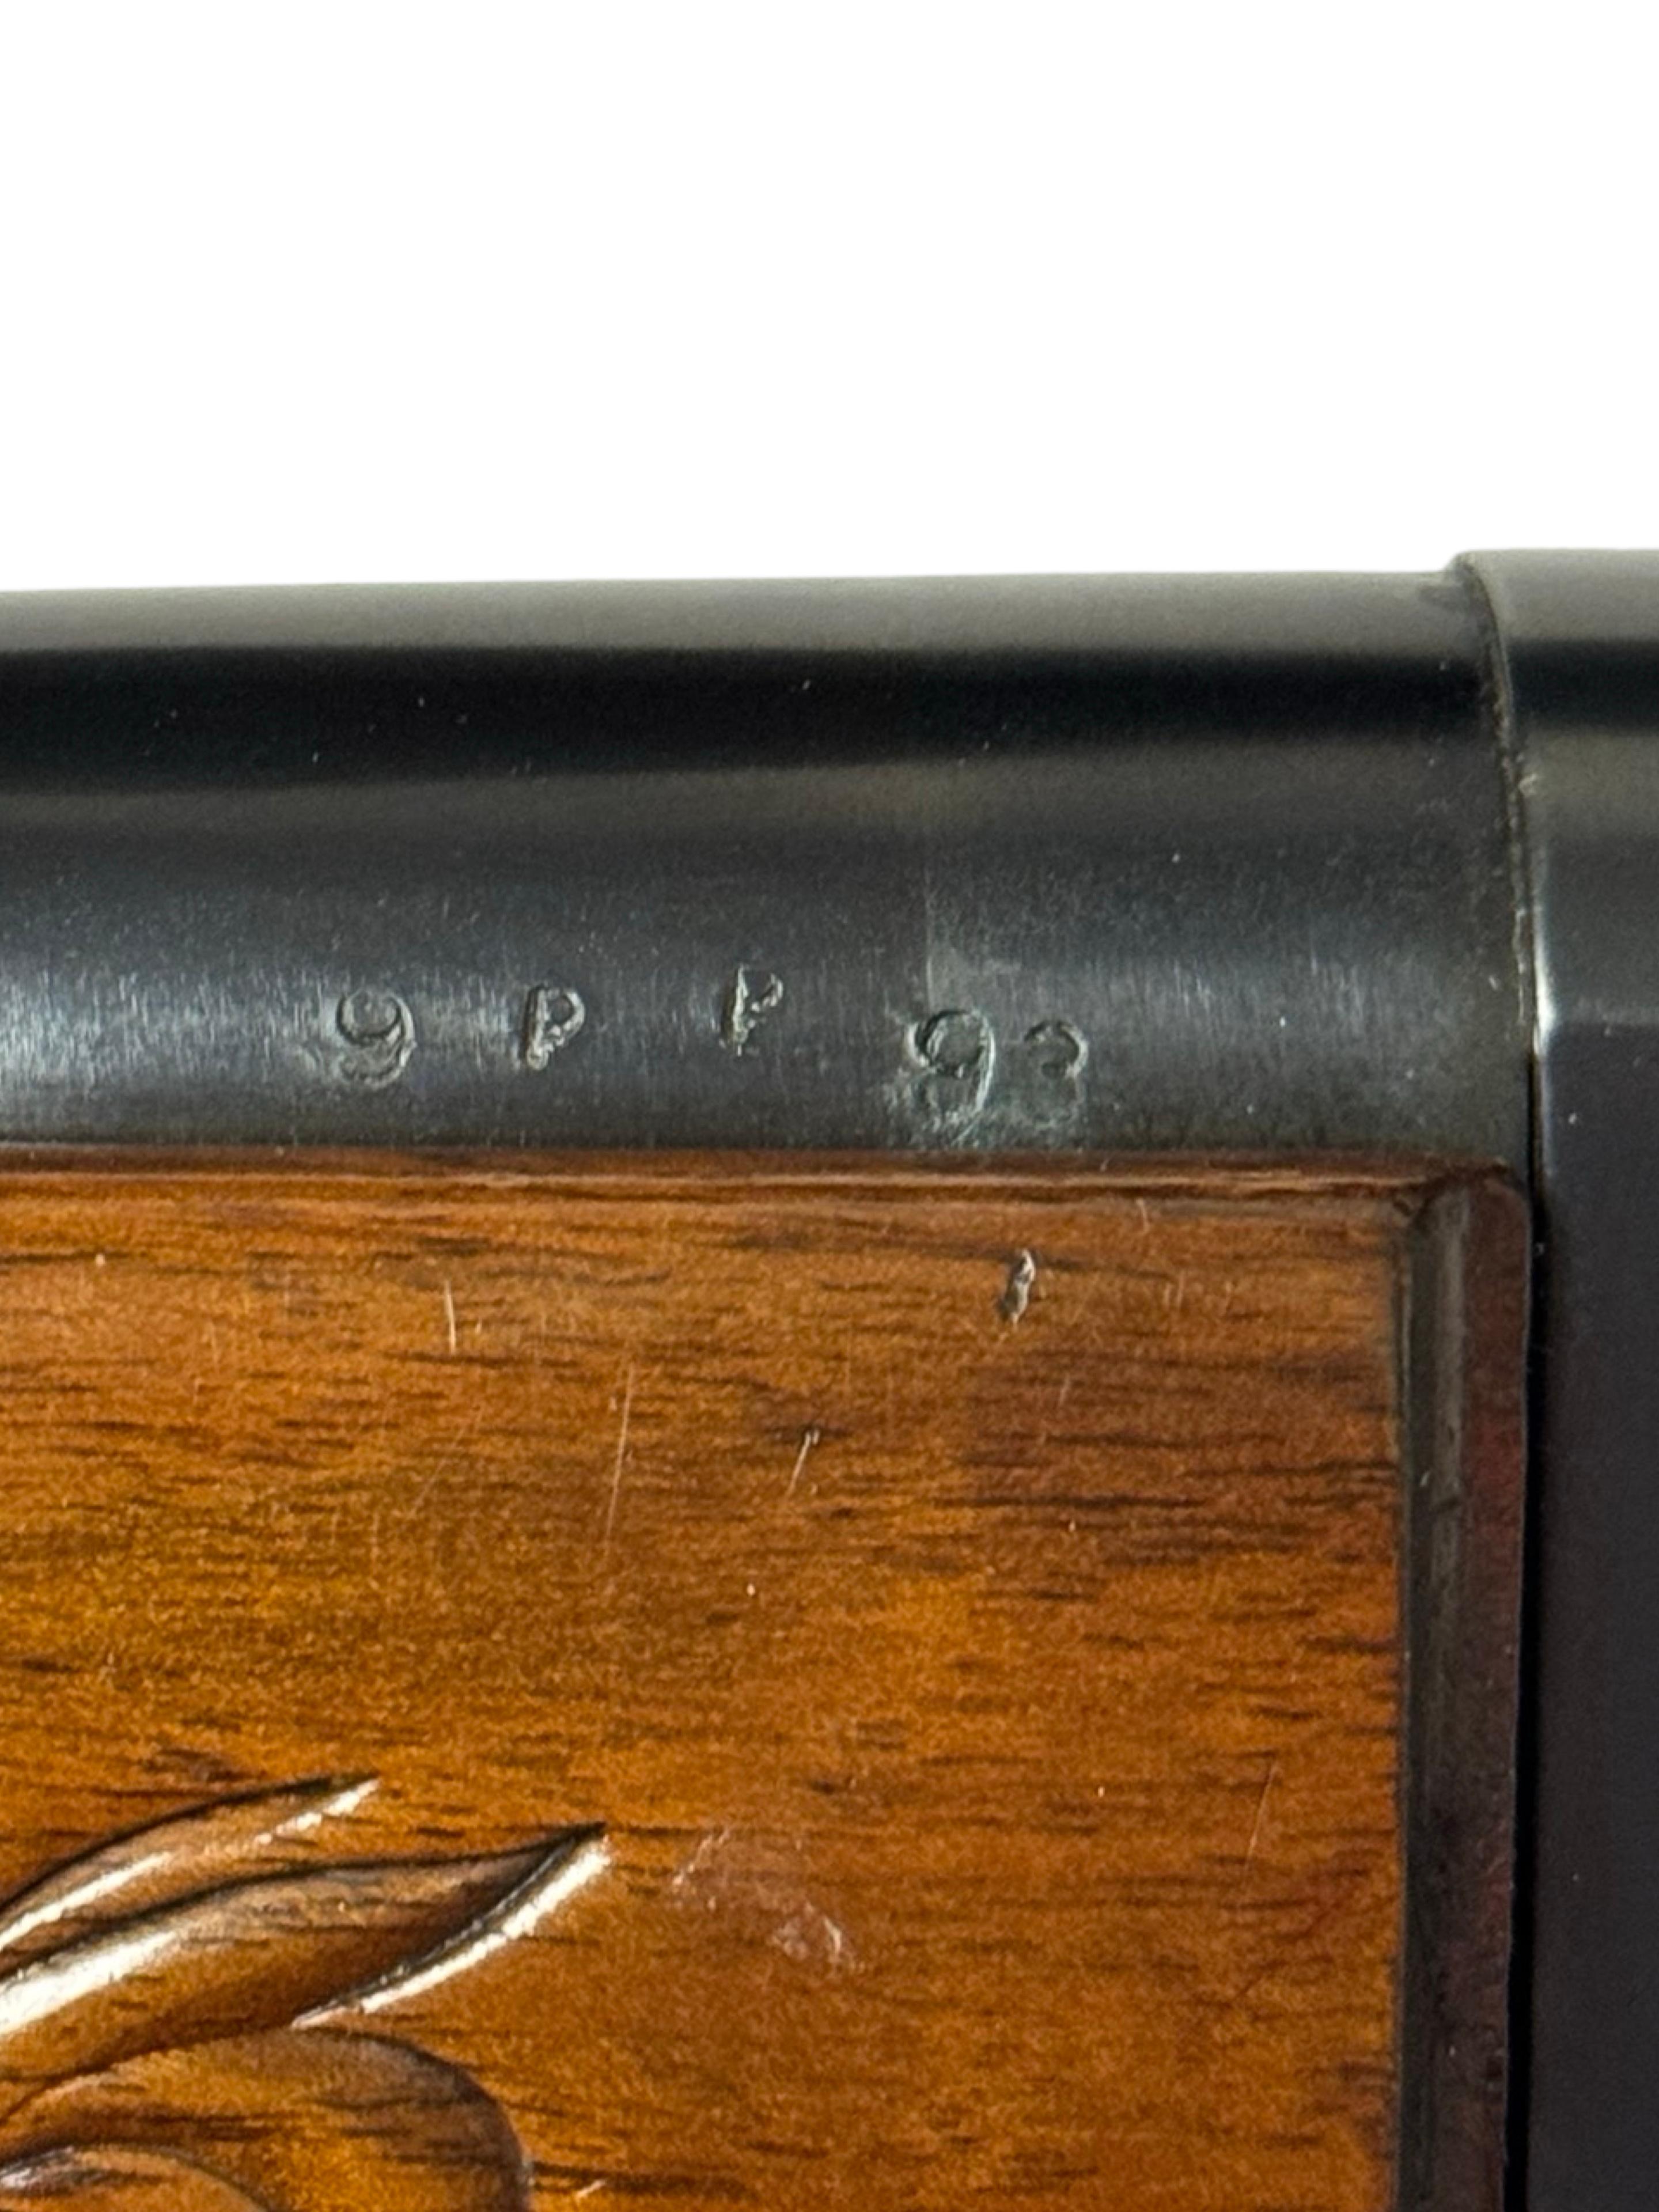 Excellent 1967 Remington Woodsmaster Model 742 BDL Deluxe .30-06 SPRG Semi-Auto Rifle w/ Scope